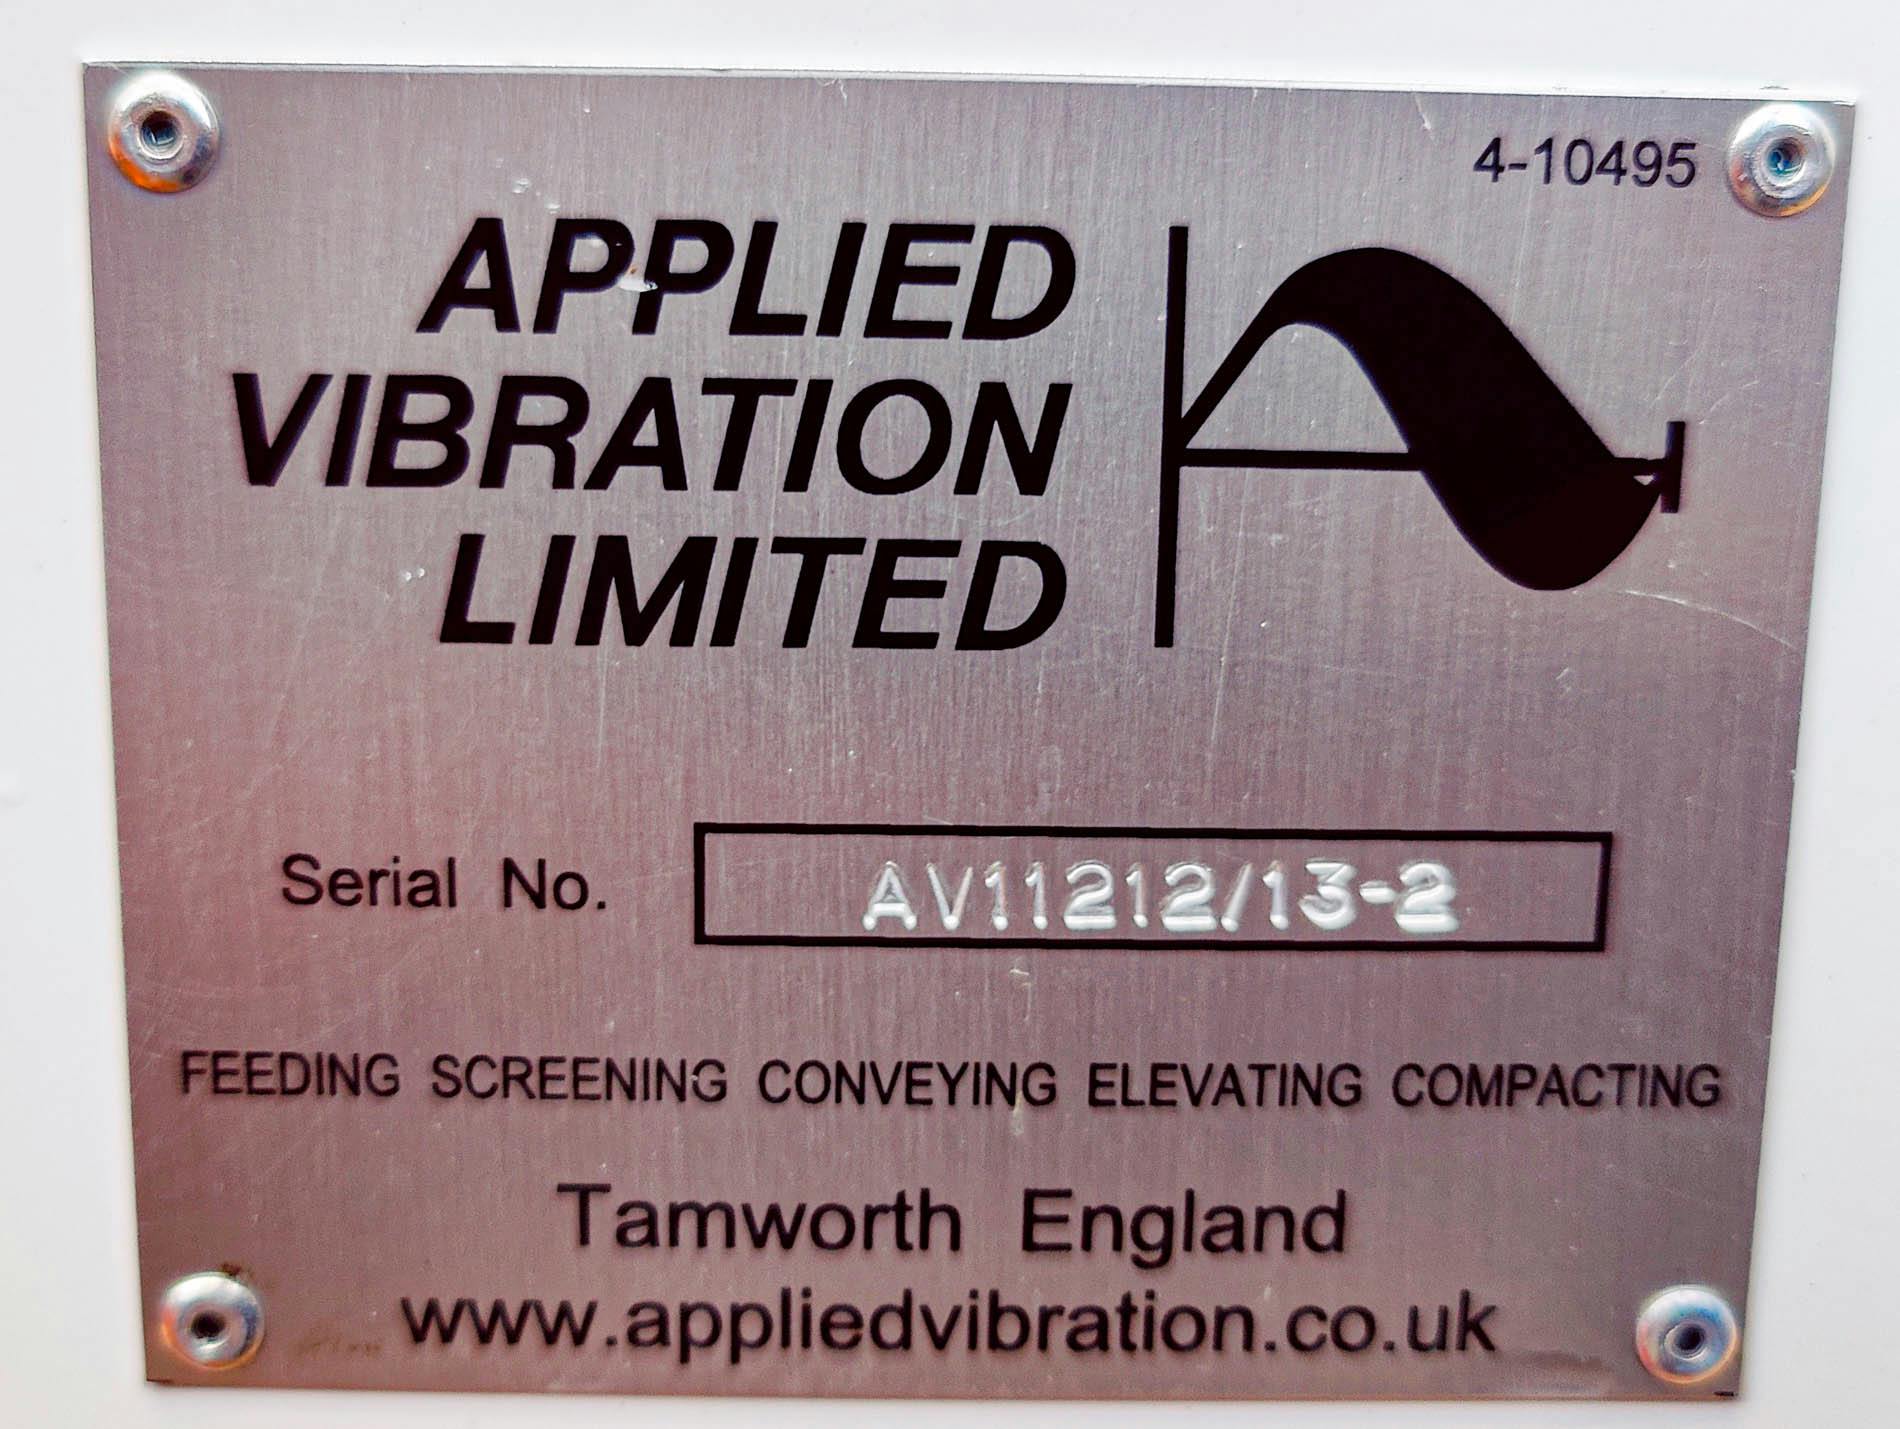 Applied Vibration Limited - Alimentateur vibrants - image 10